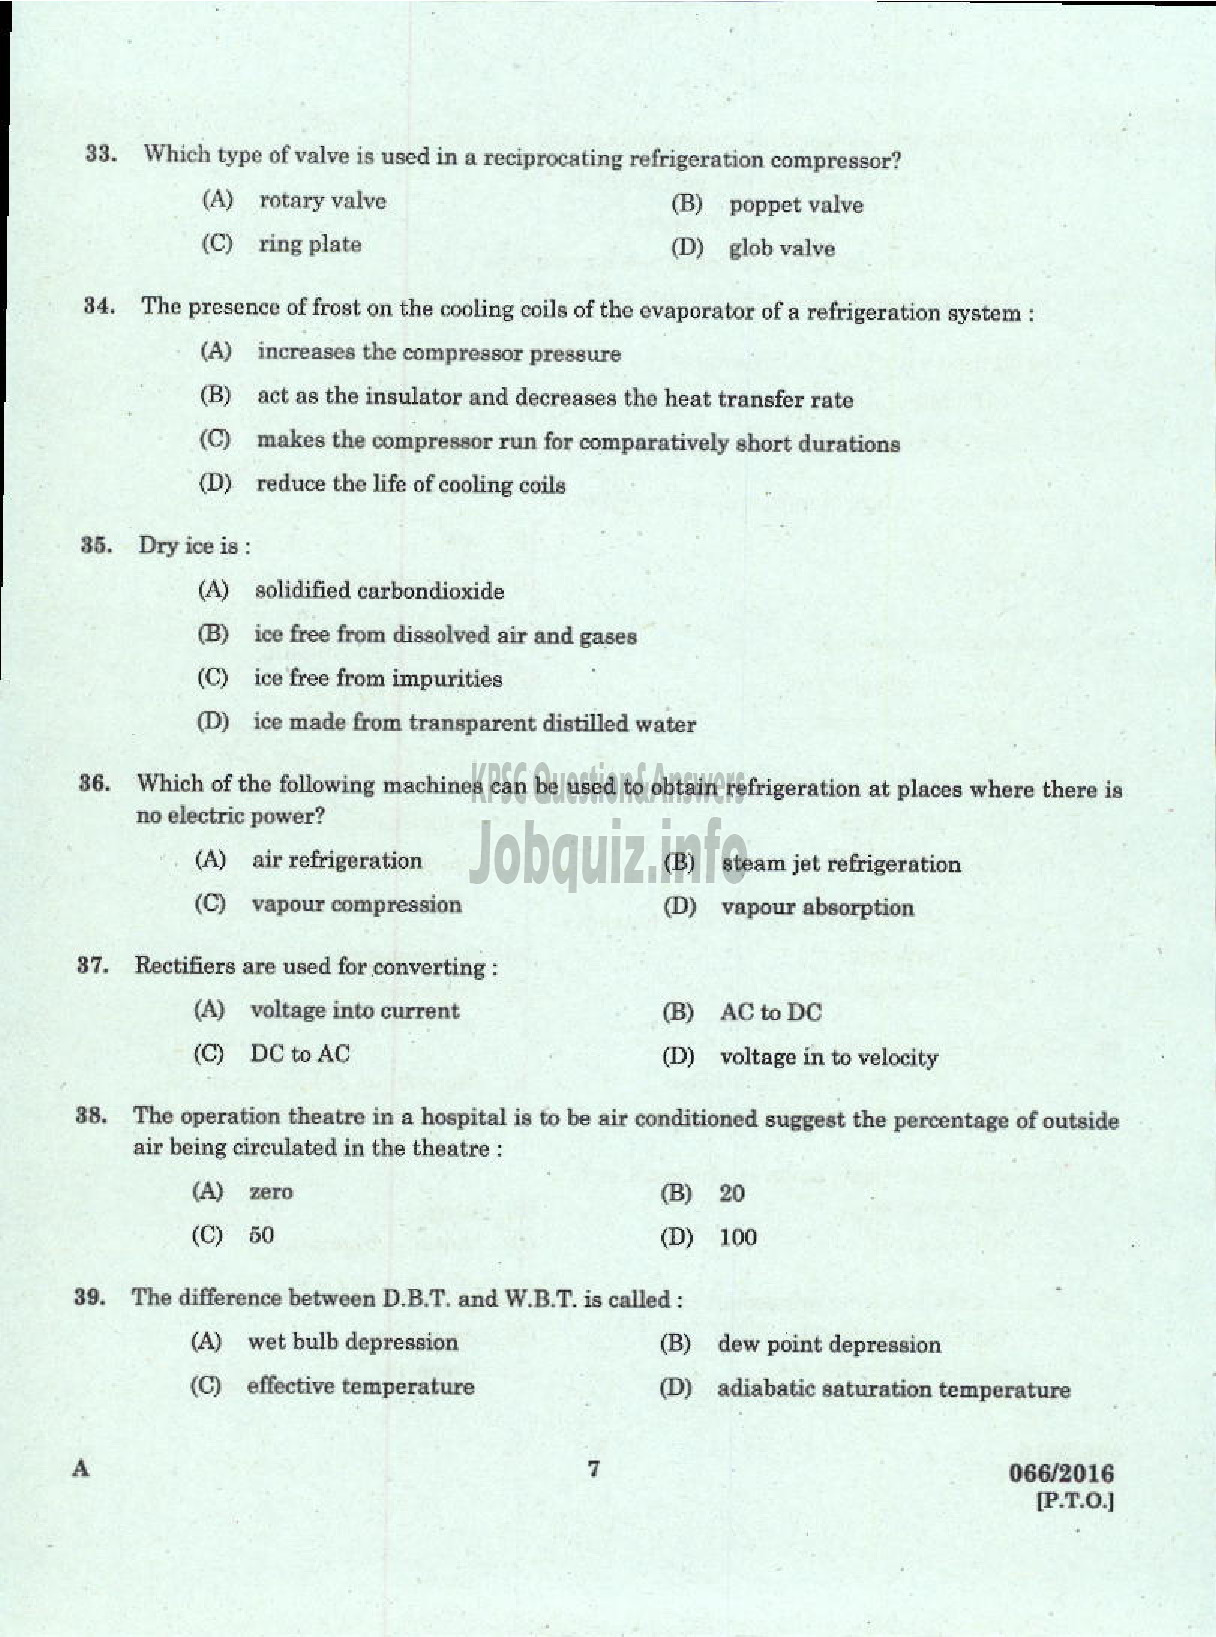 Kerala PSC Question Paper - REFRIGERATION MECHANIC UIP HEALTH SERVICES-5